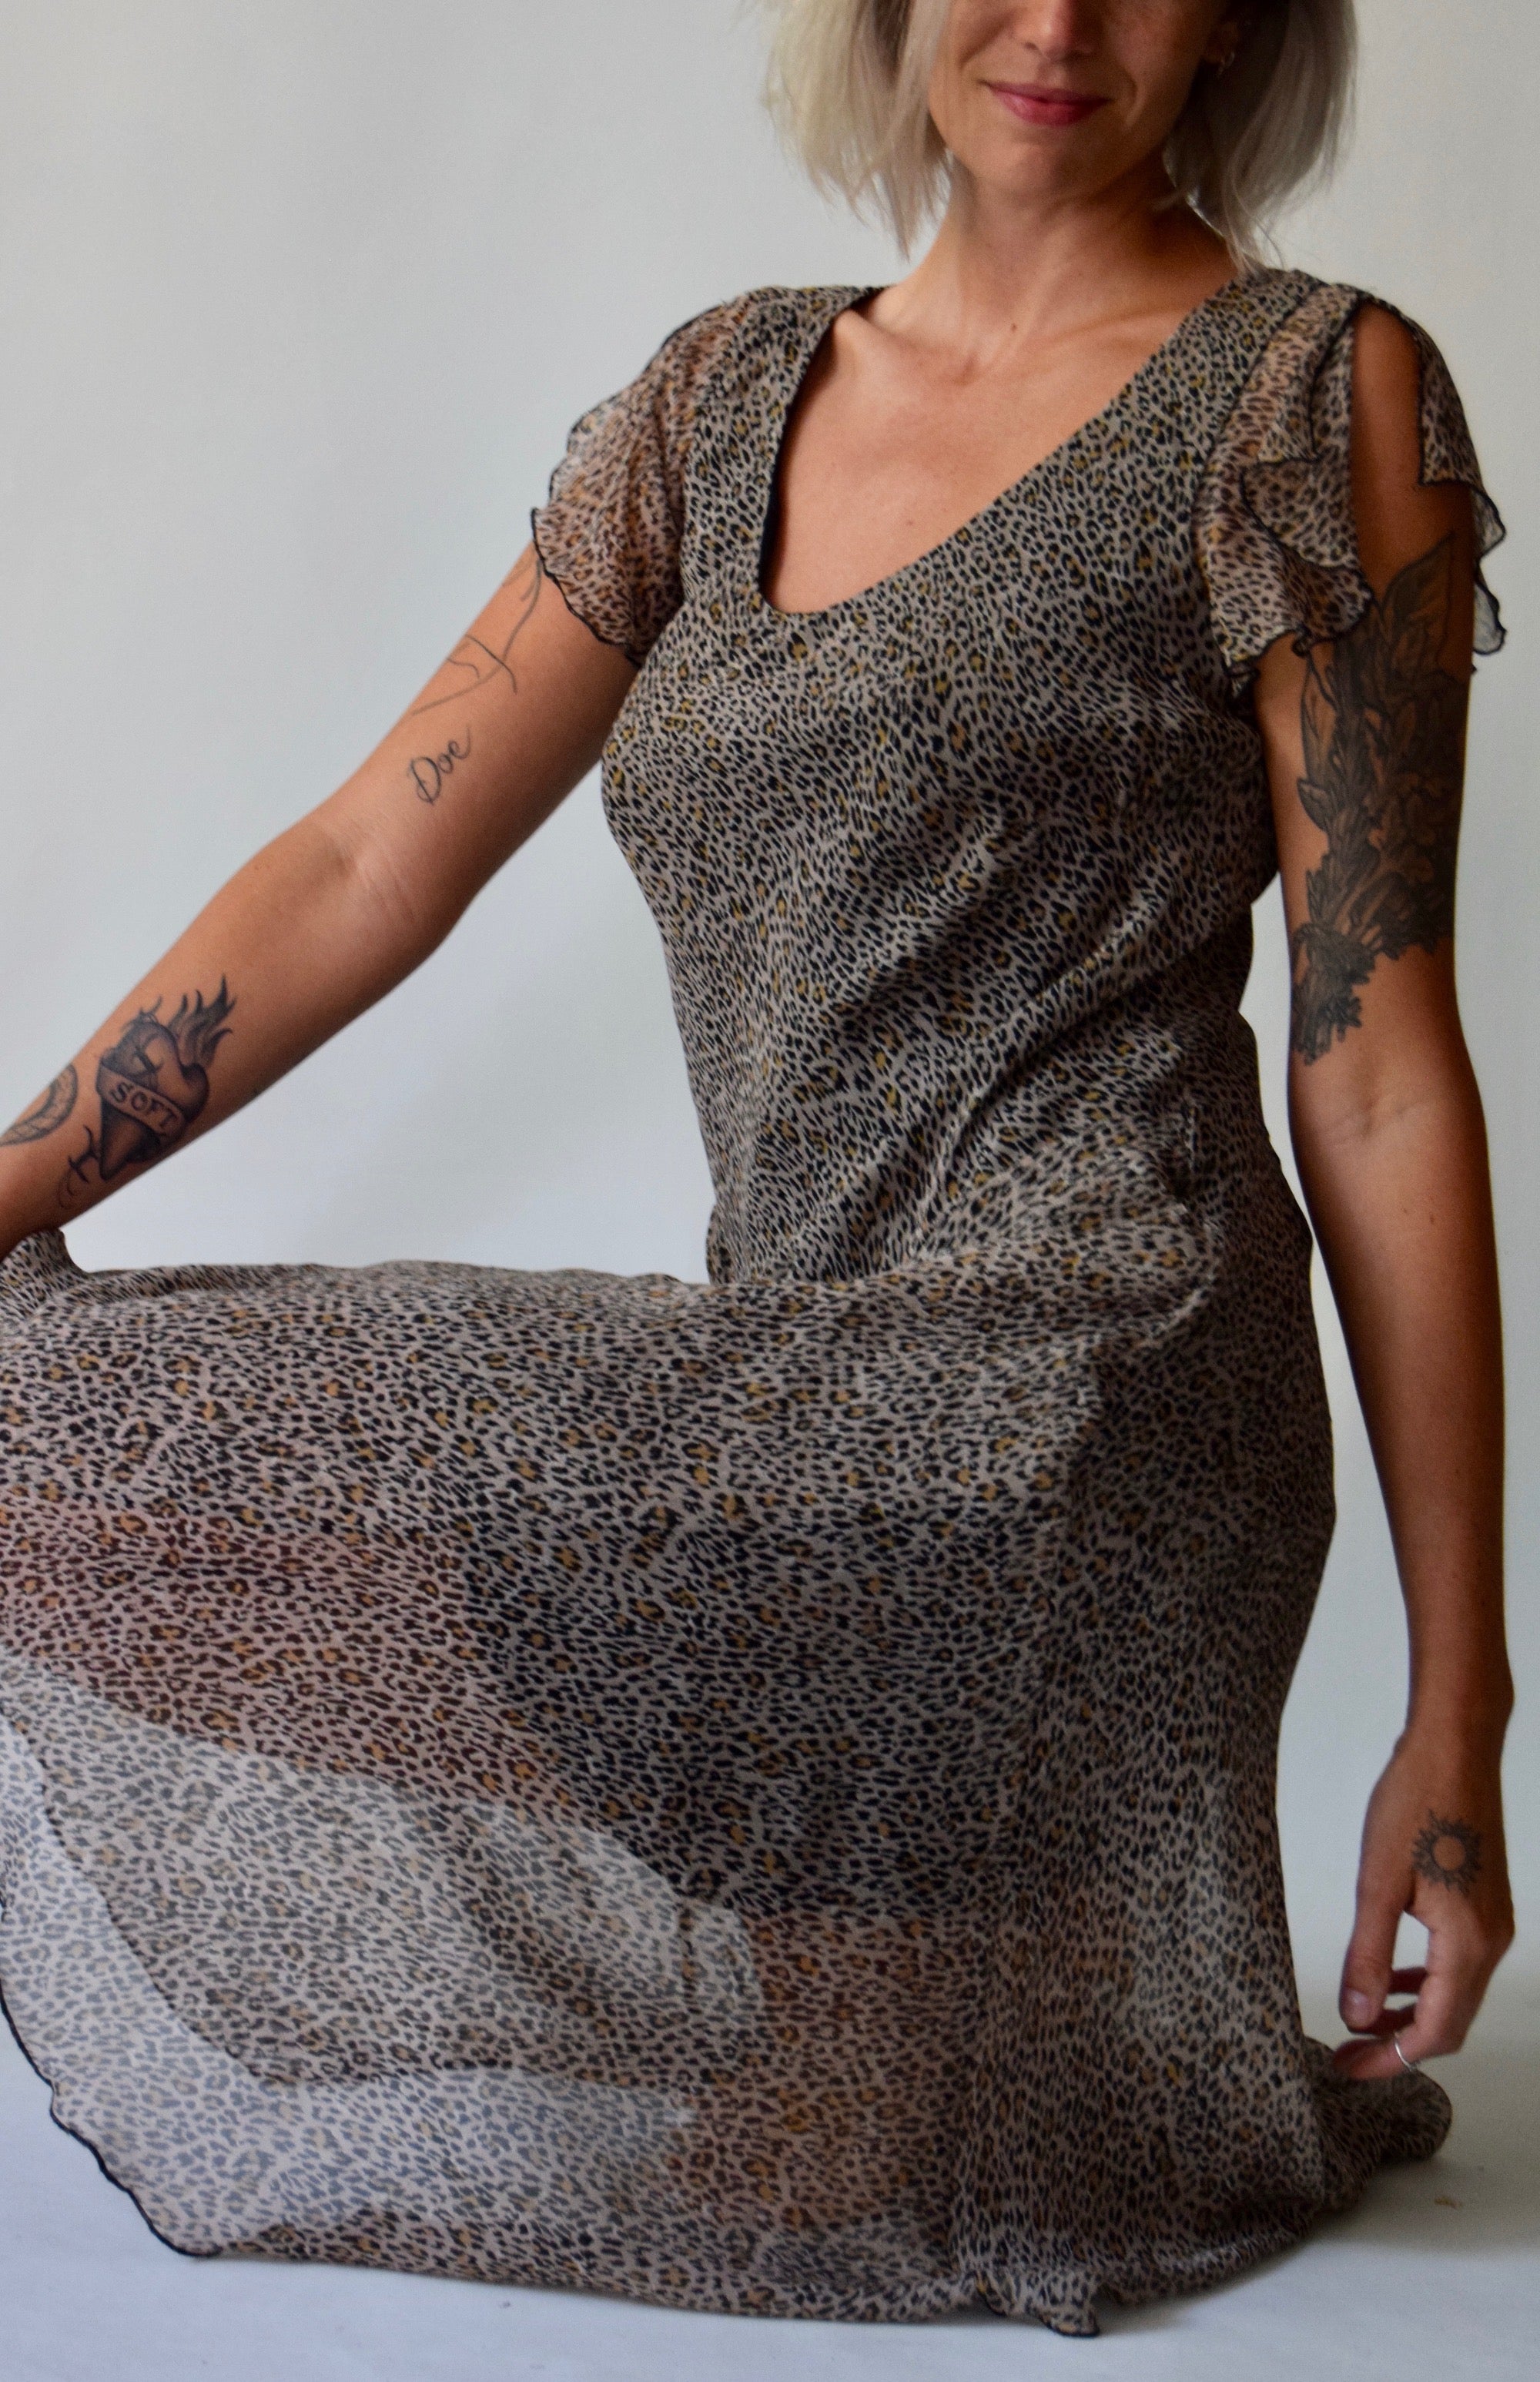 Part One : Aughts Leopard Print Dress